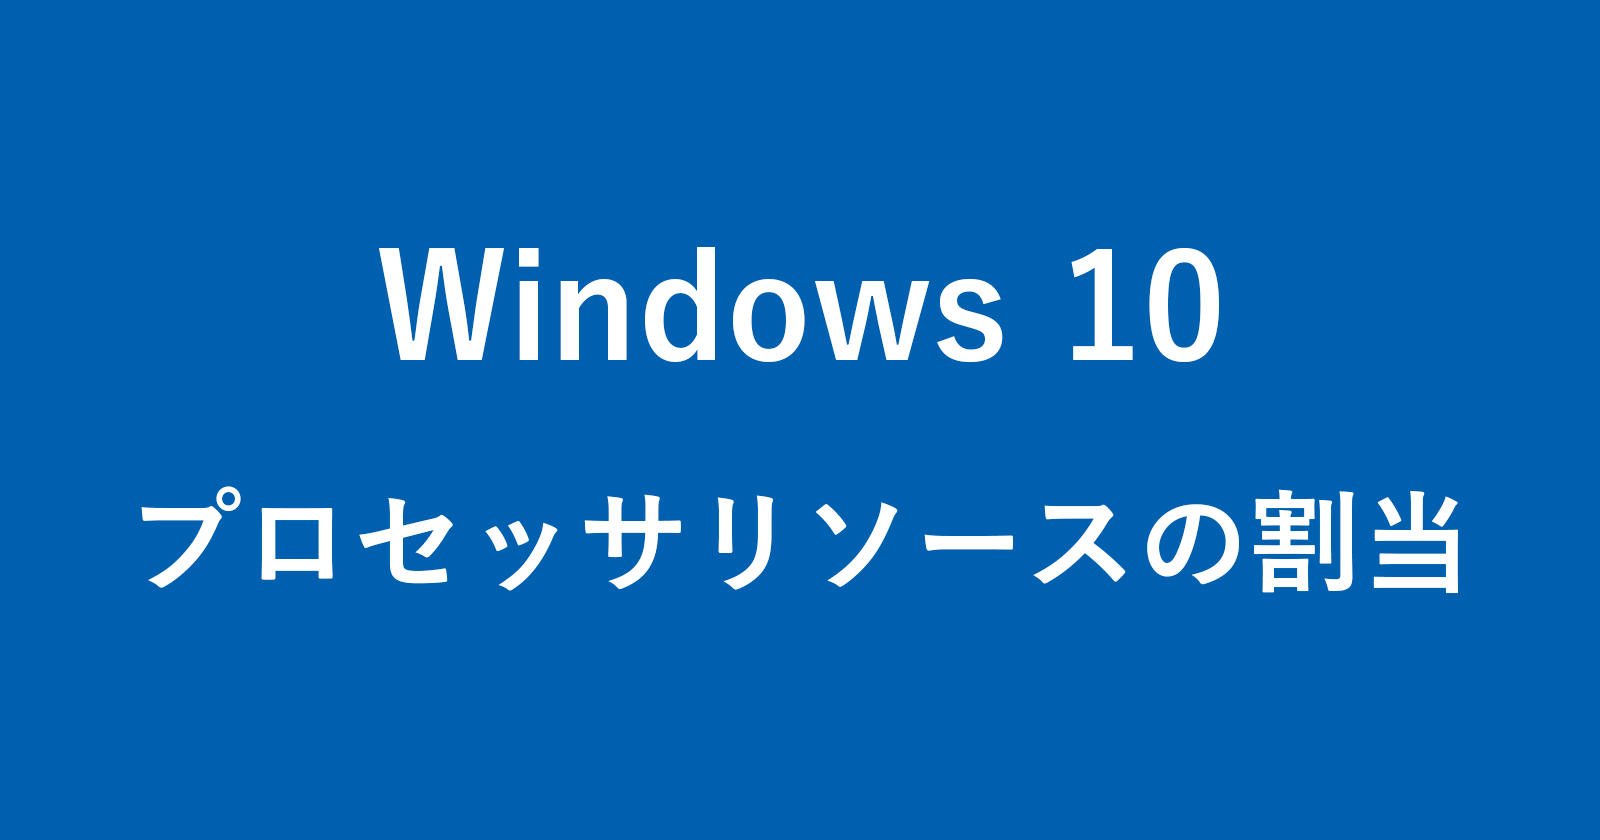 windows 10 processor schedule